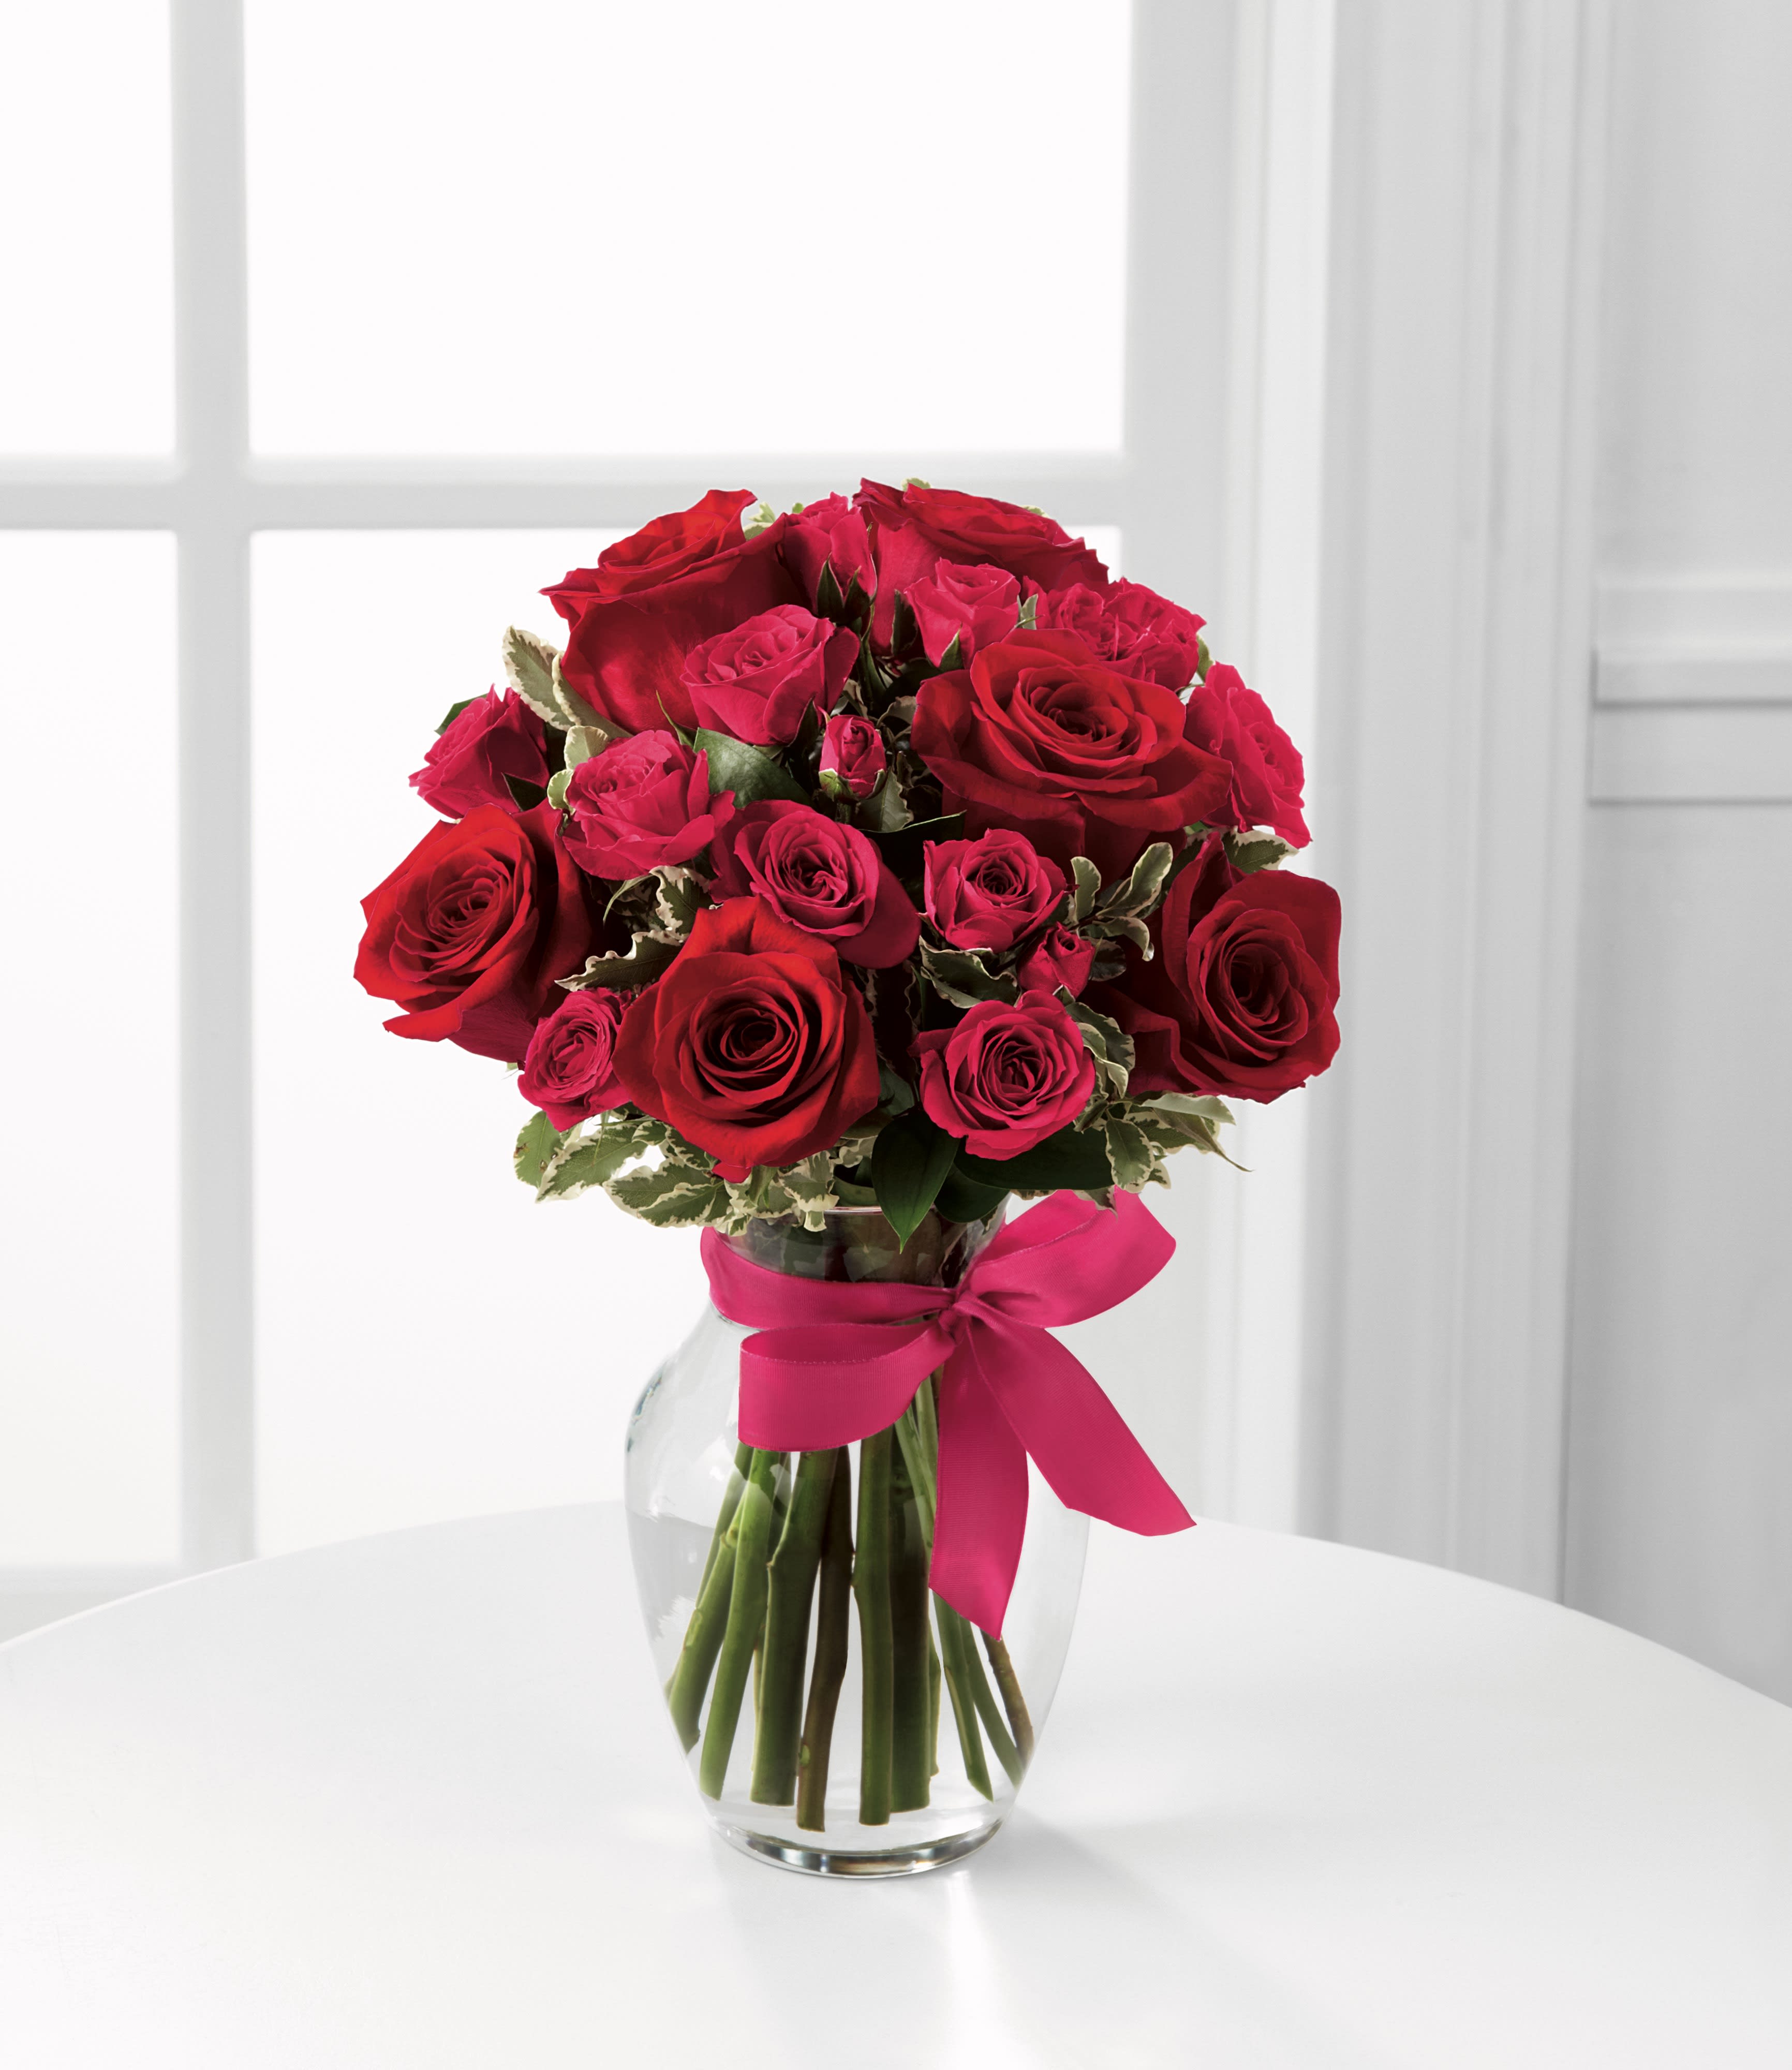 Rose Flower Bouquet - Dozen Long Stem Red Roses and Ferrero Chocolates